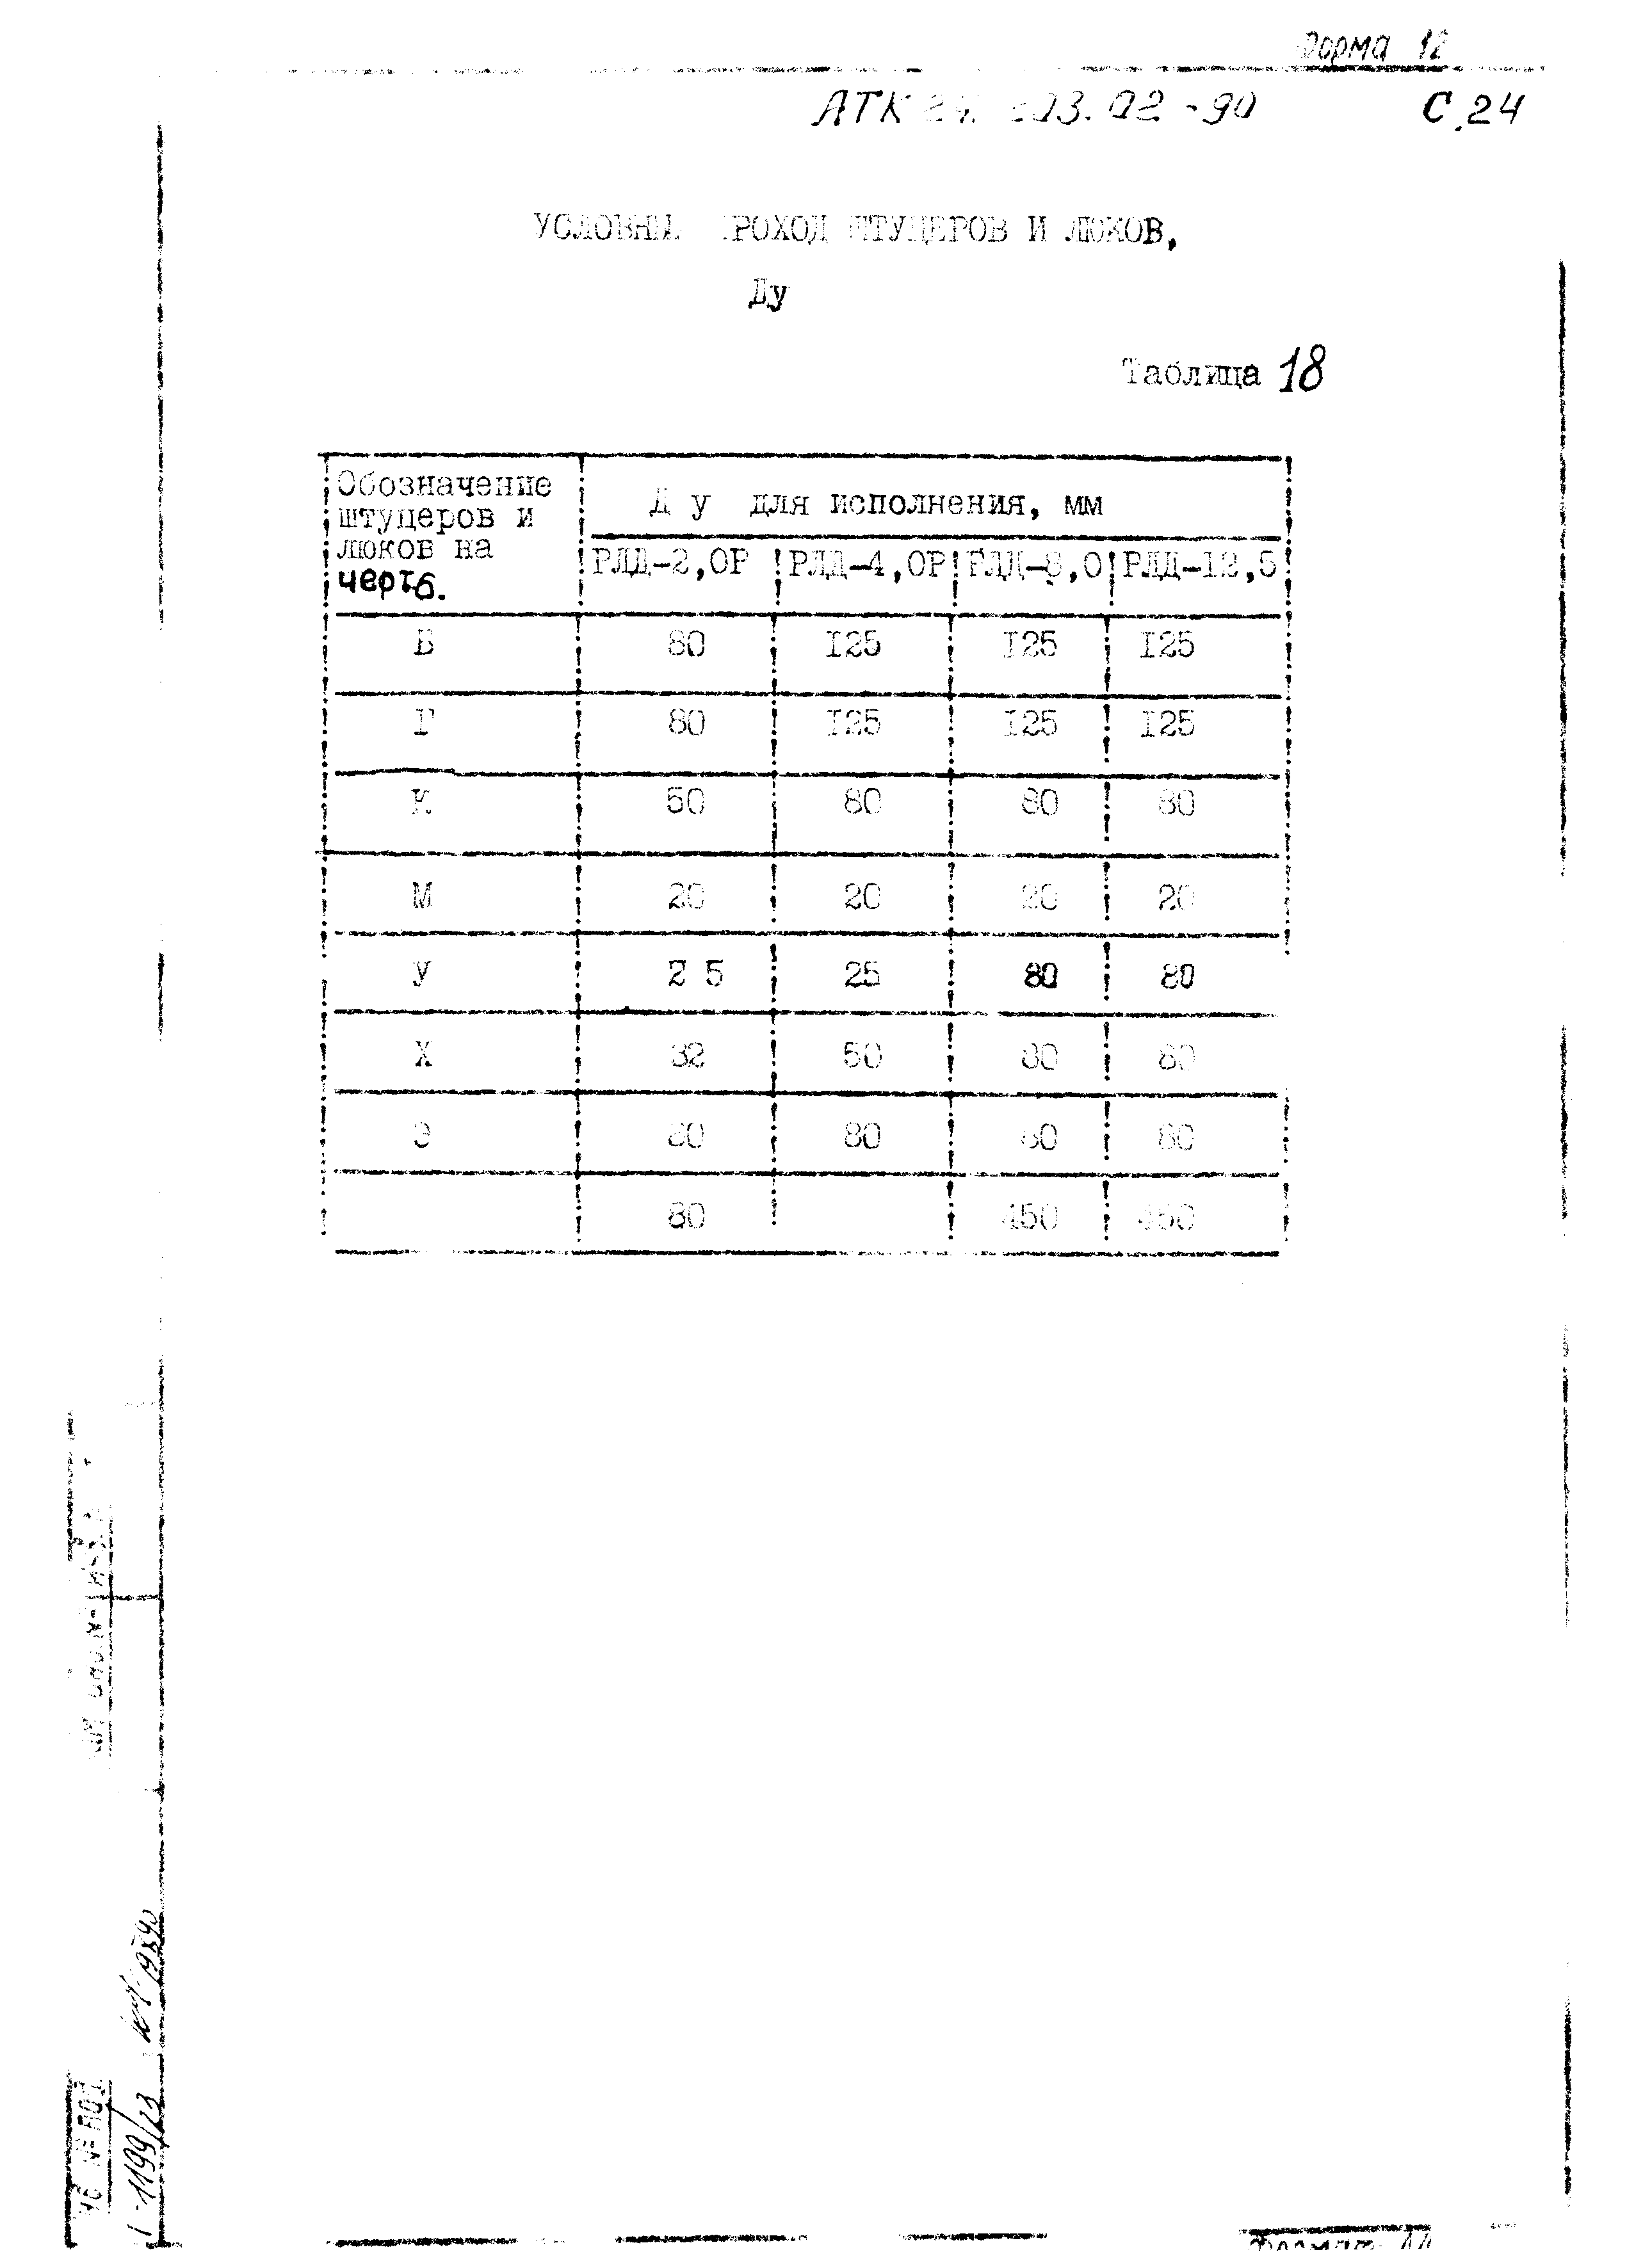 АТК 24.203.02-90